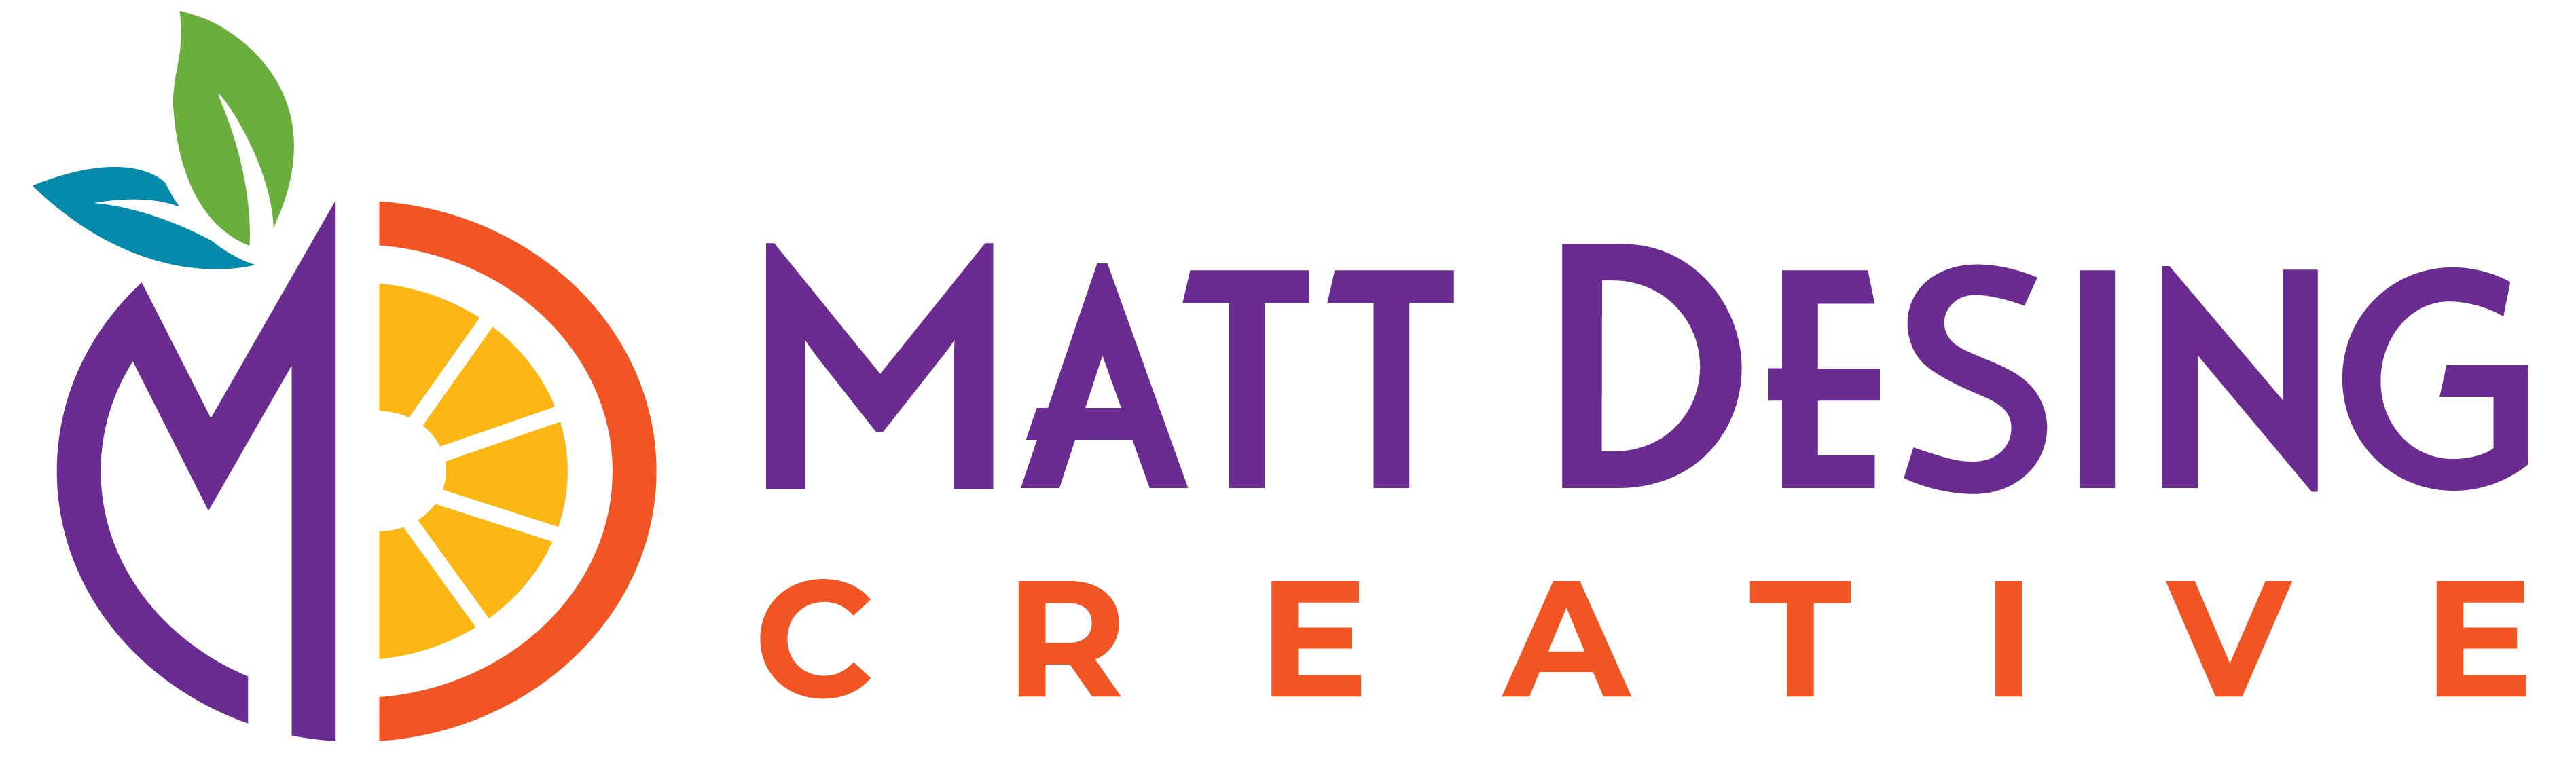 Matt Desing Creative logo.